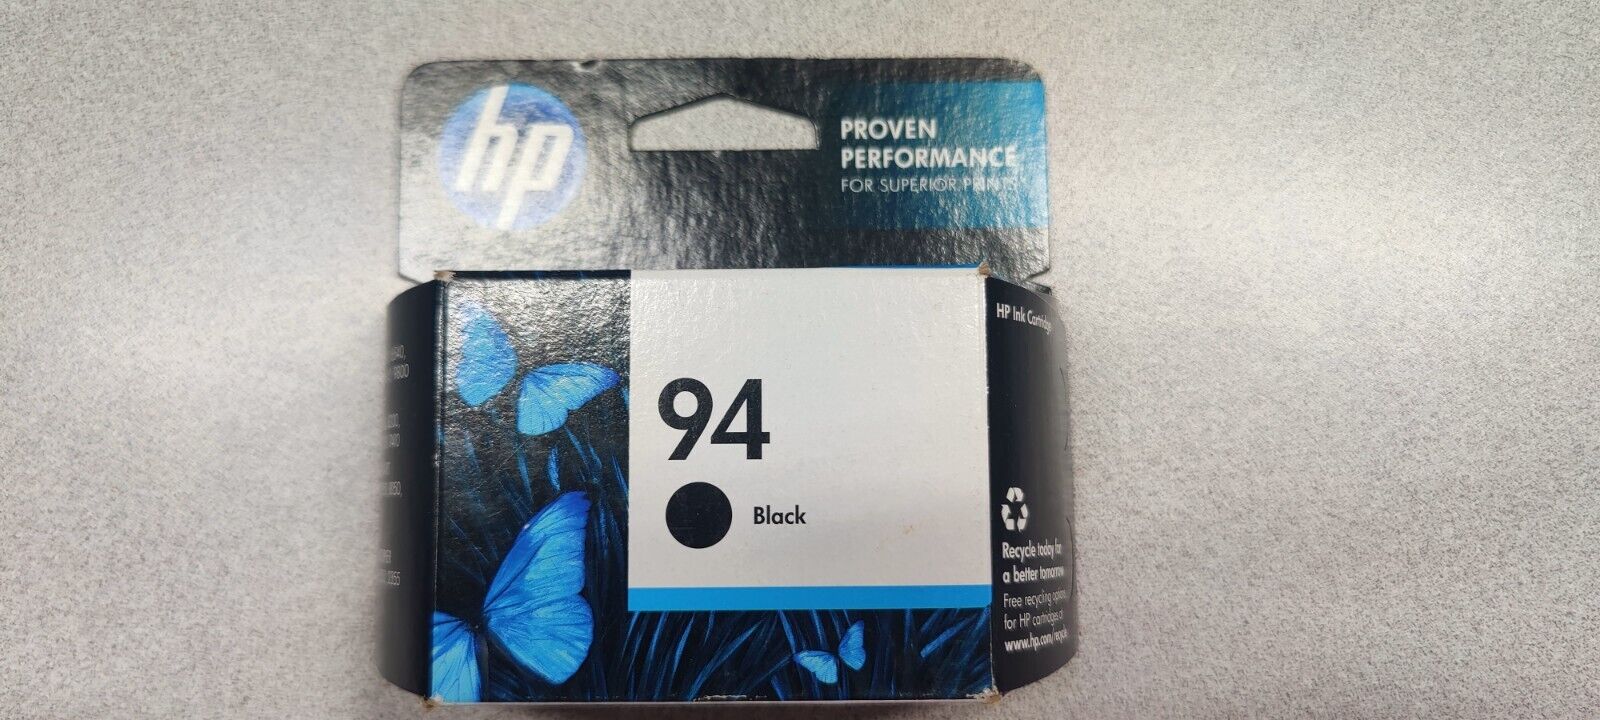 Genuine HP 94 Ink Cartridge - Black NEW/Expired (C8765WN)